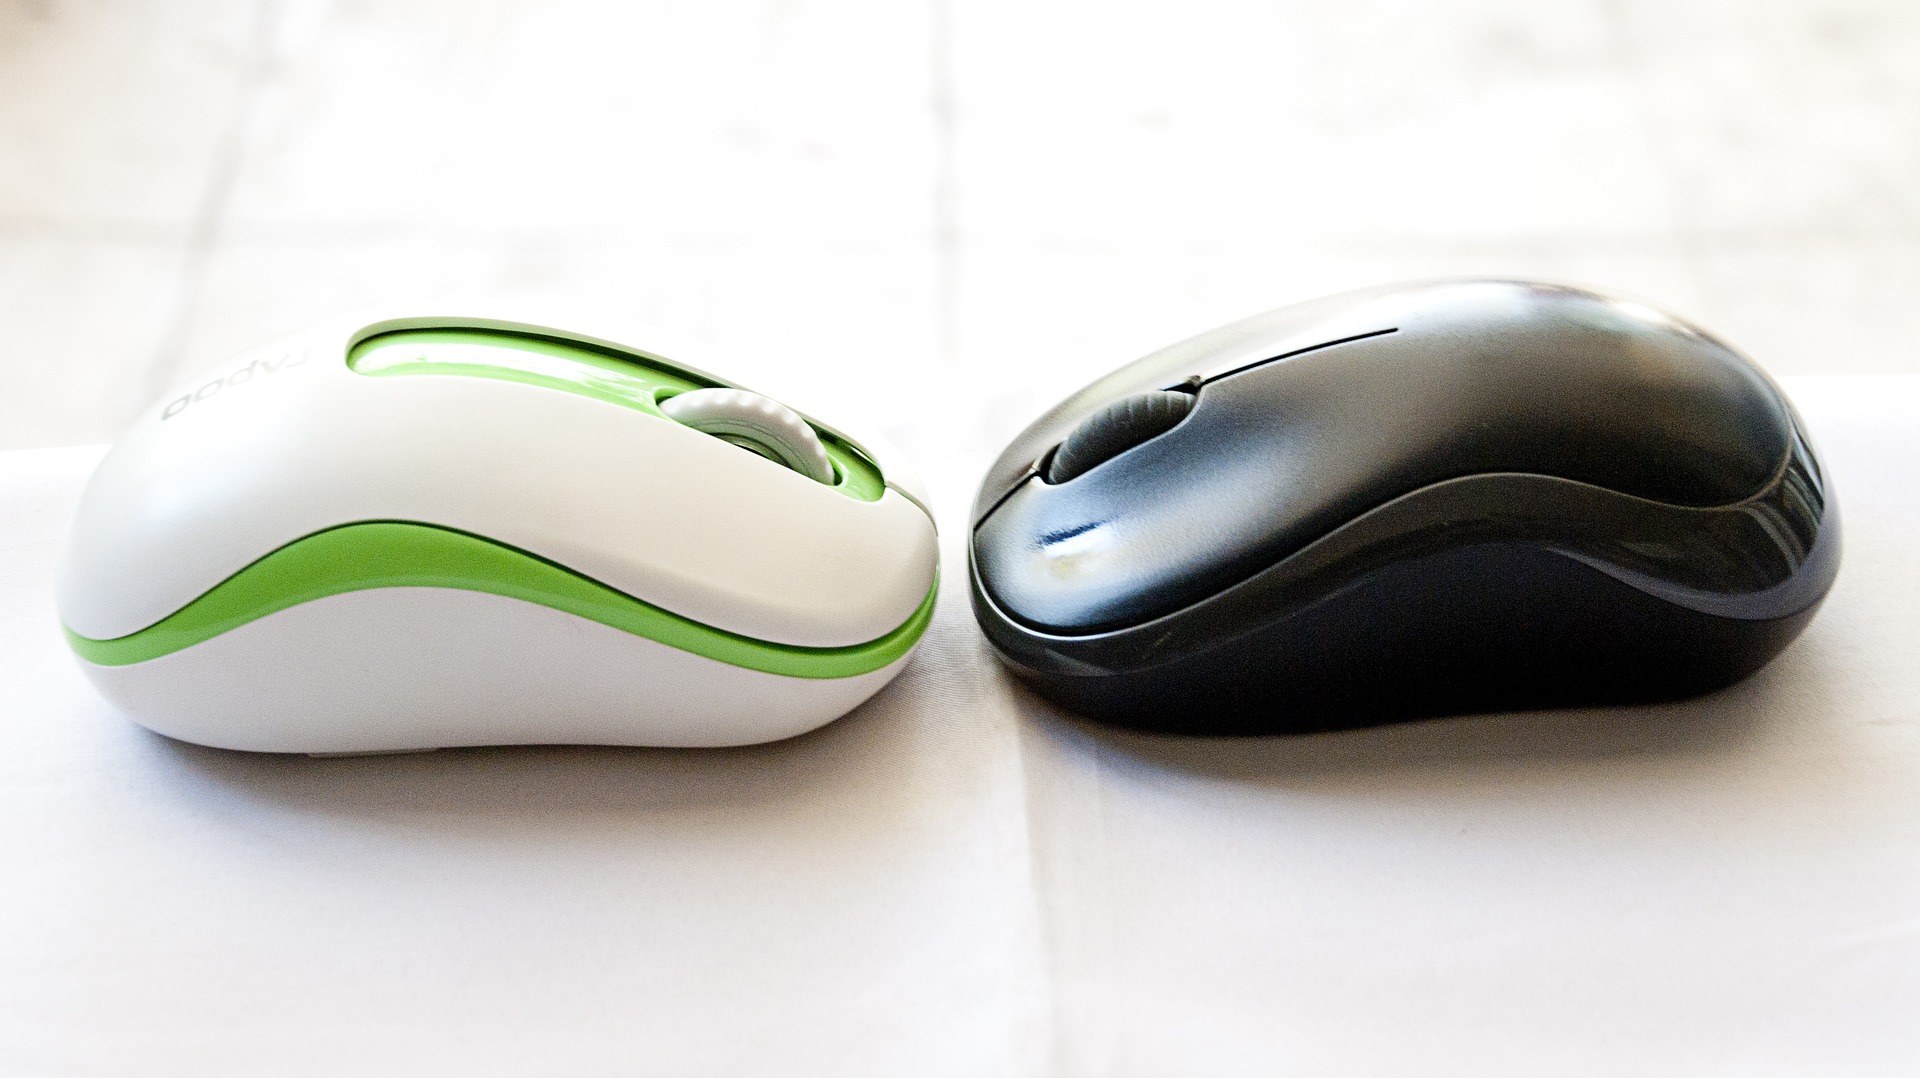 mac wireless mouse